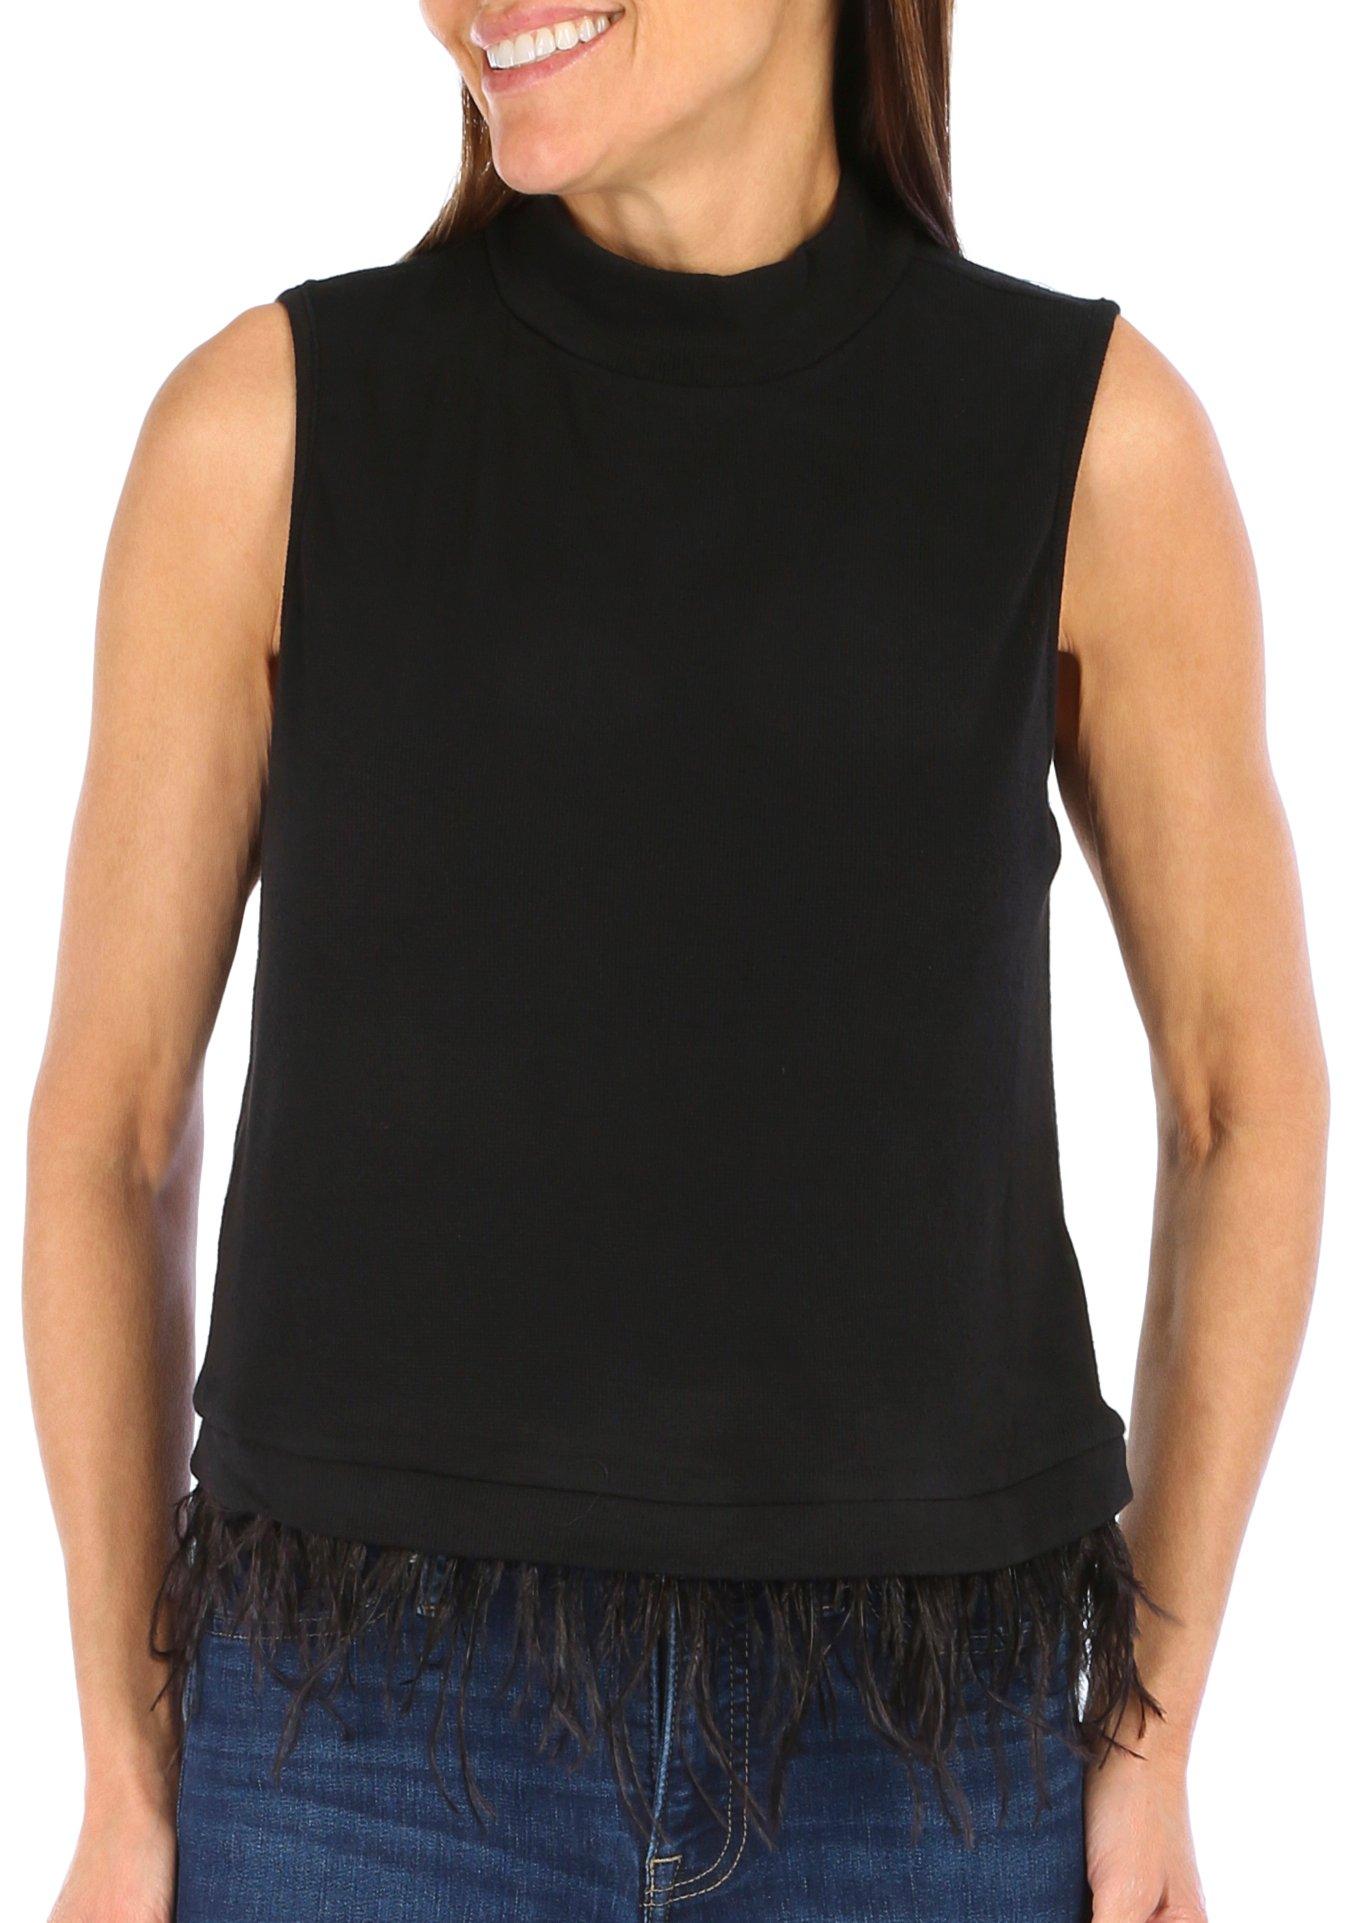 REEL LEGENDS Women's Size M Sleeveless Shirt MARINER BERRY MOTION